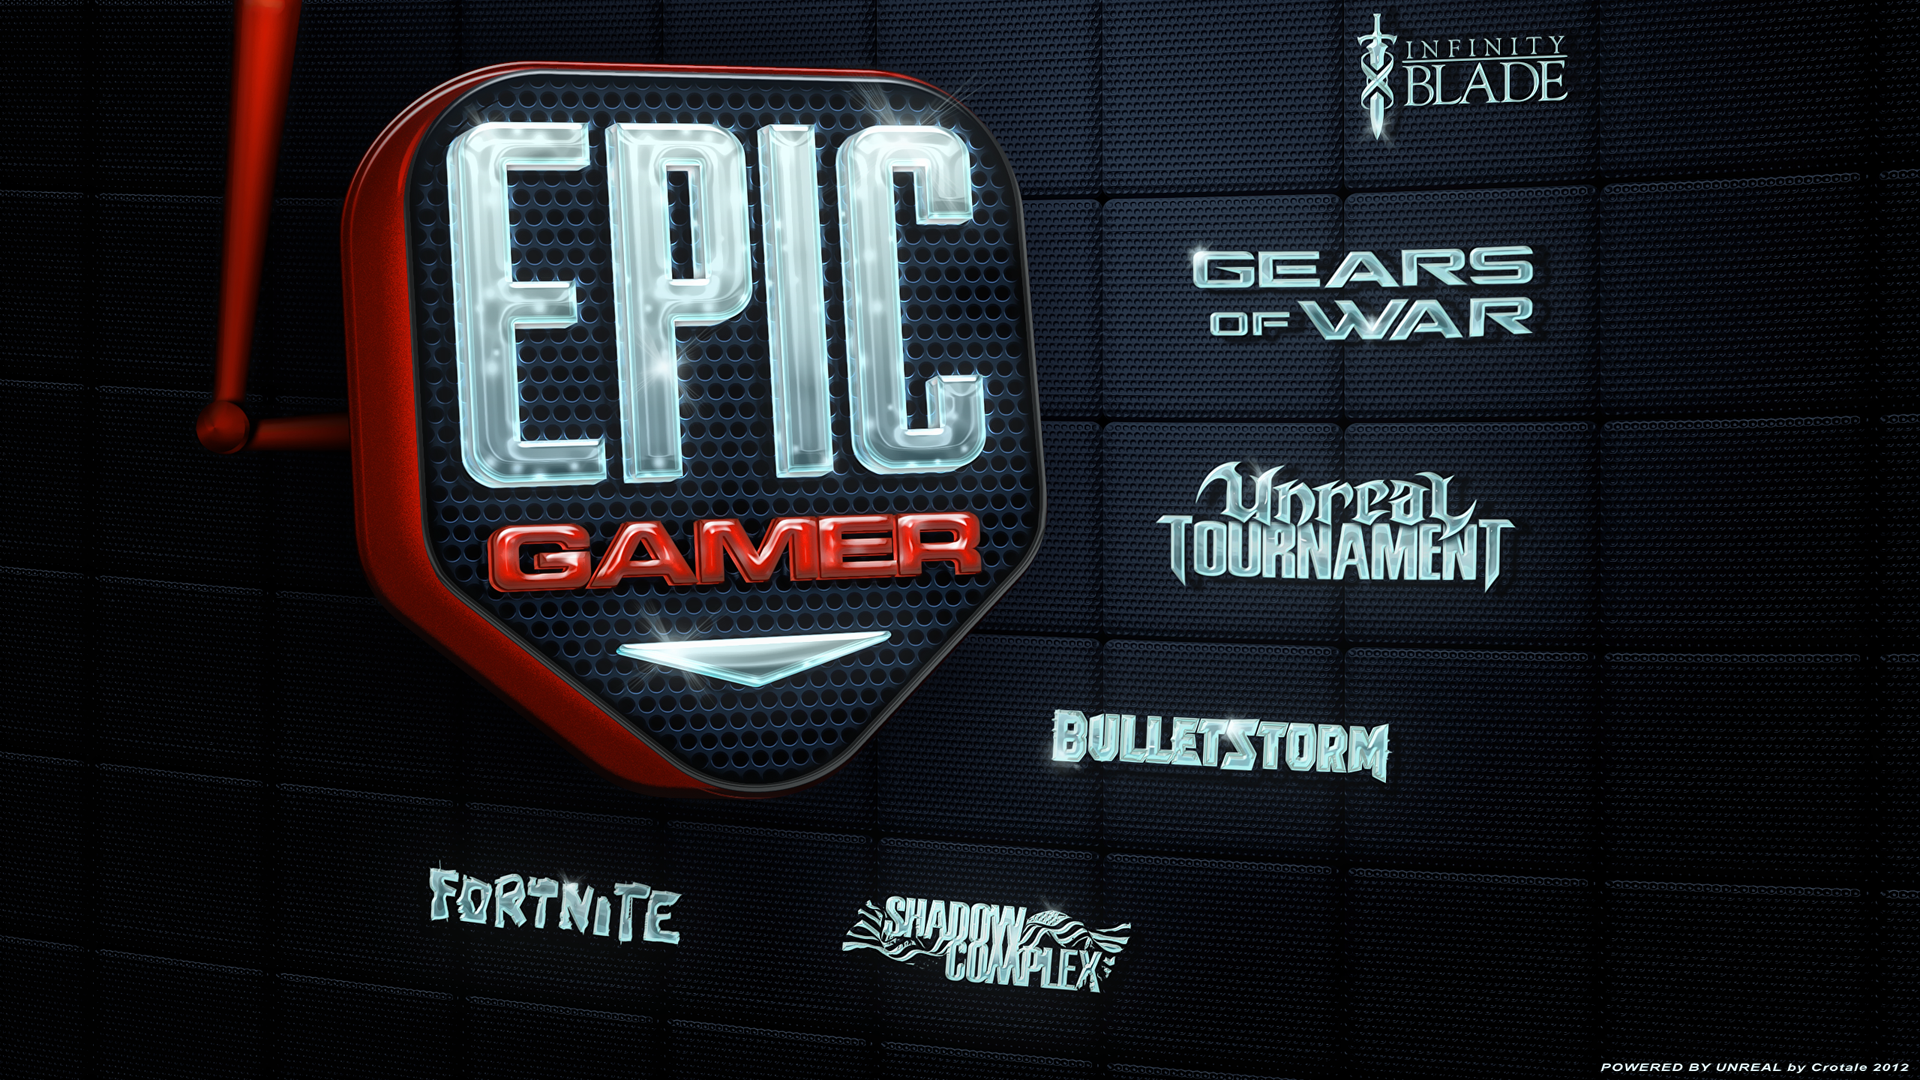 Epic Gamer Desktop Wallpaper by Crotale | Epic Games Community